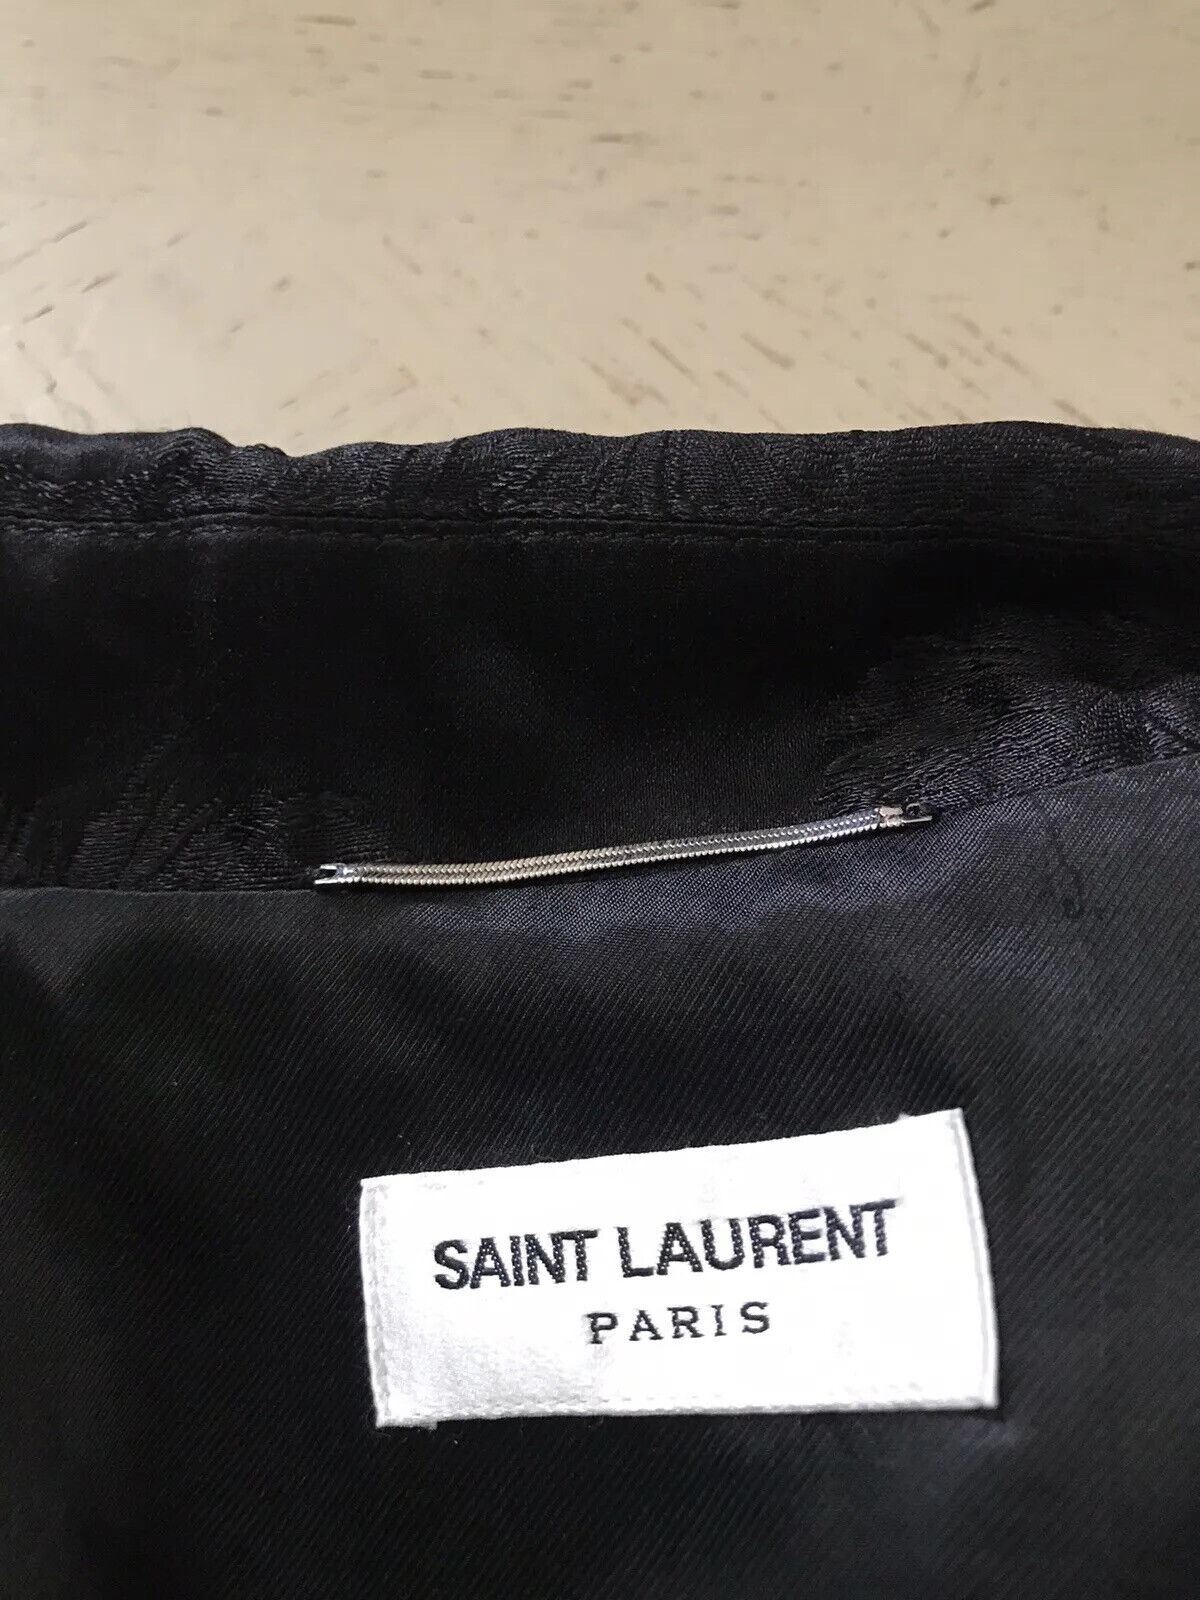 Neu $ 2690 Saint Laurent Raglanjacke mit Reißverschluss, Schwarz, 38 US (48 Eu), Italien